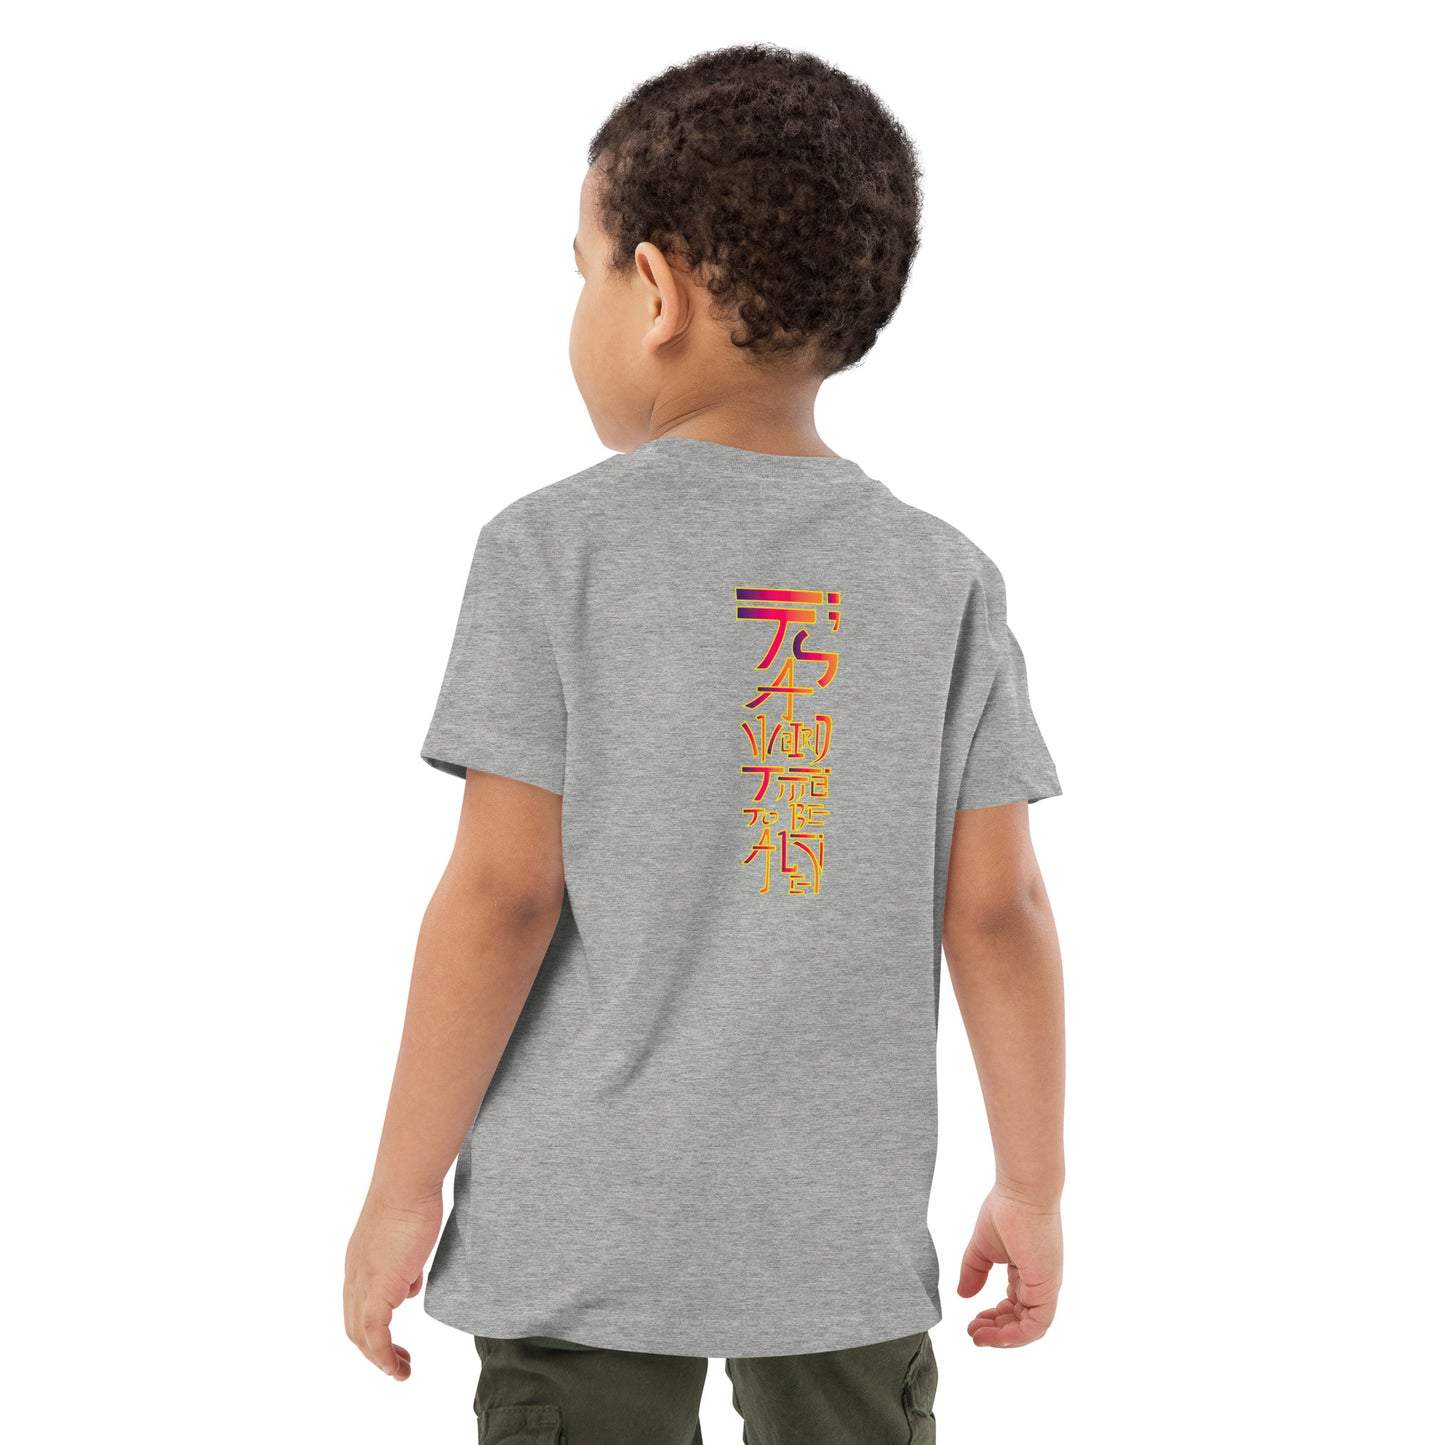 IAWTTBA Kid's Electric Tiger Organic cotton kids t-shirt